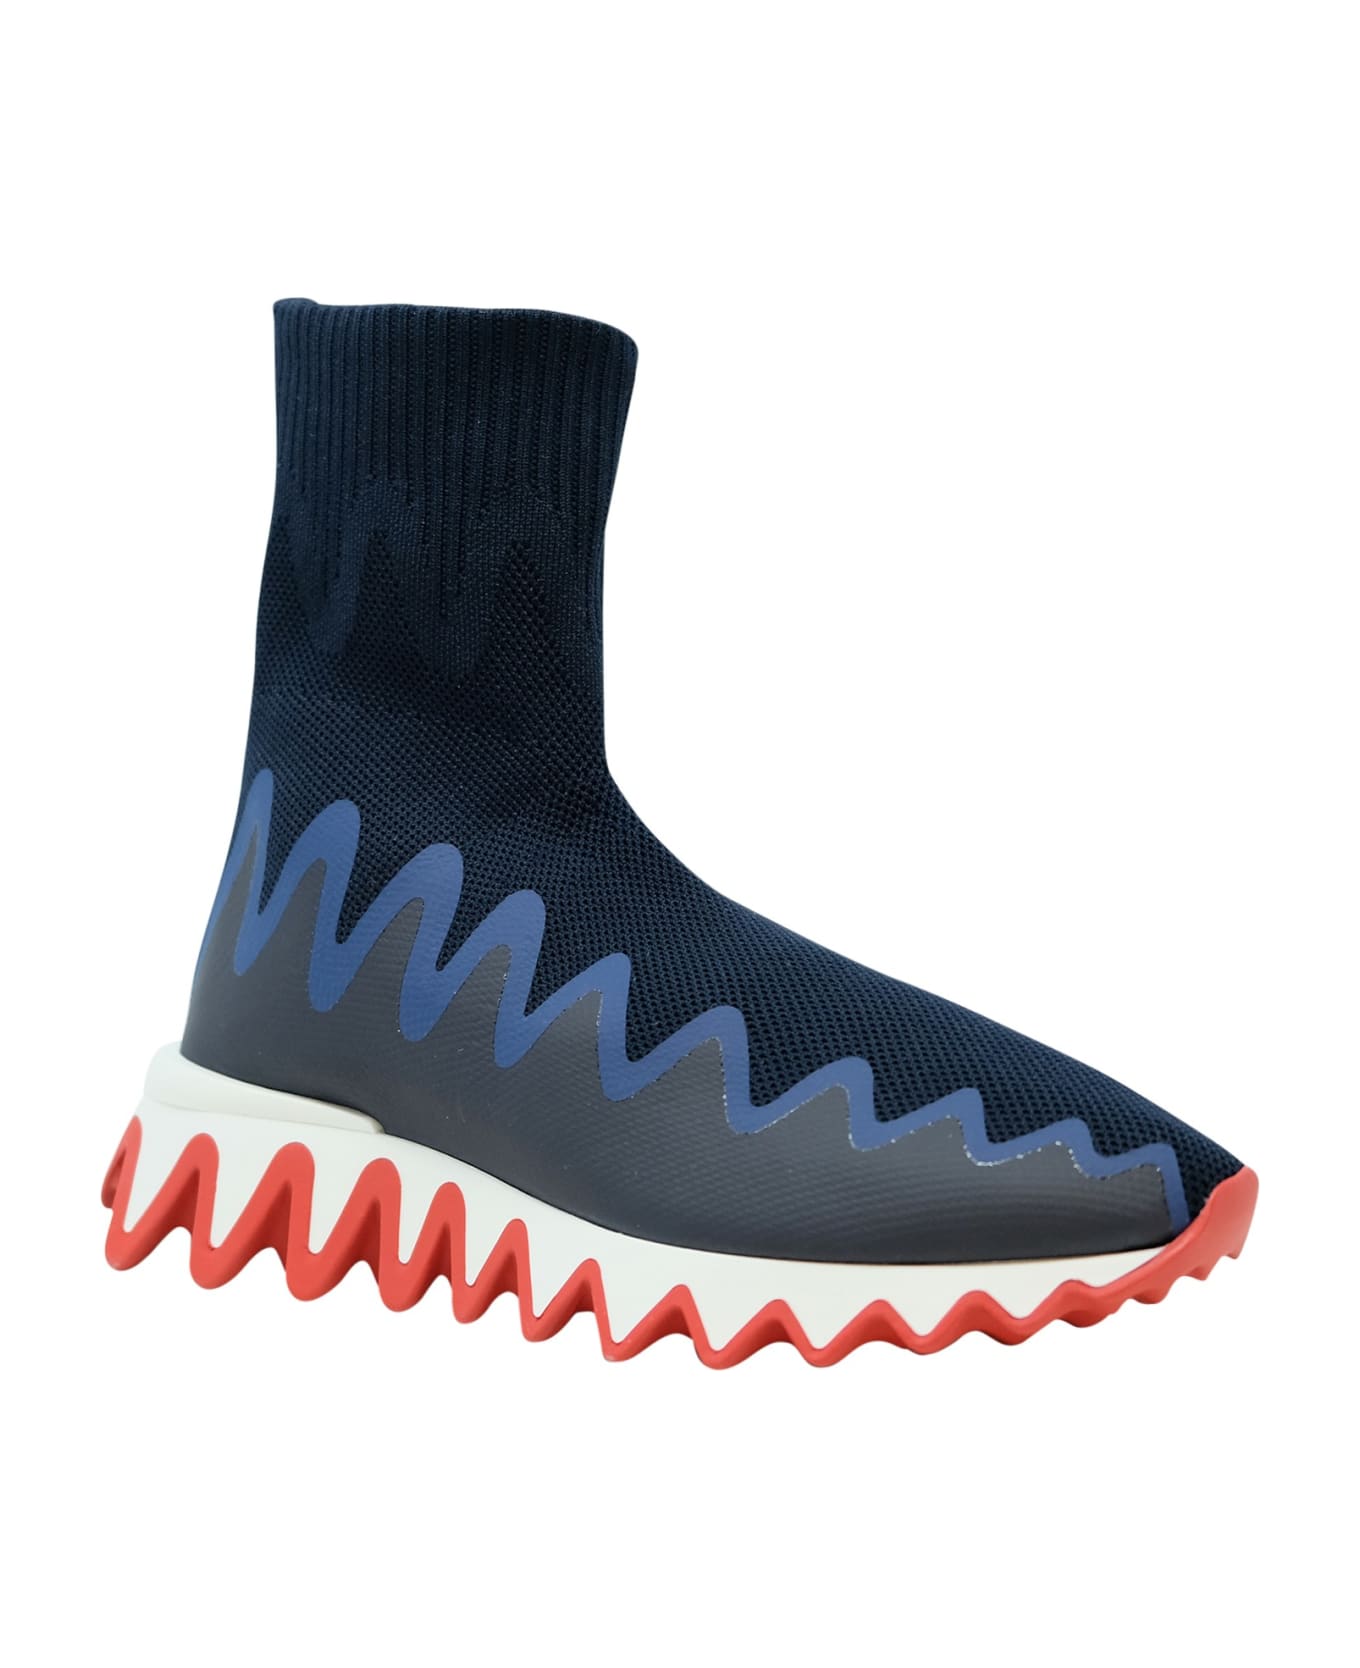 Christian Louboutin Blue Fabric Sharky Sock Sneakers スニーカー